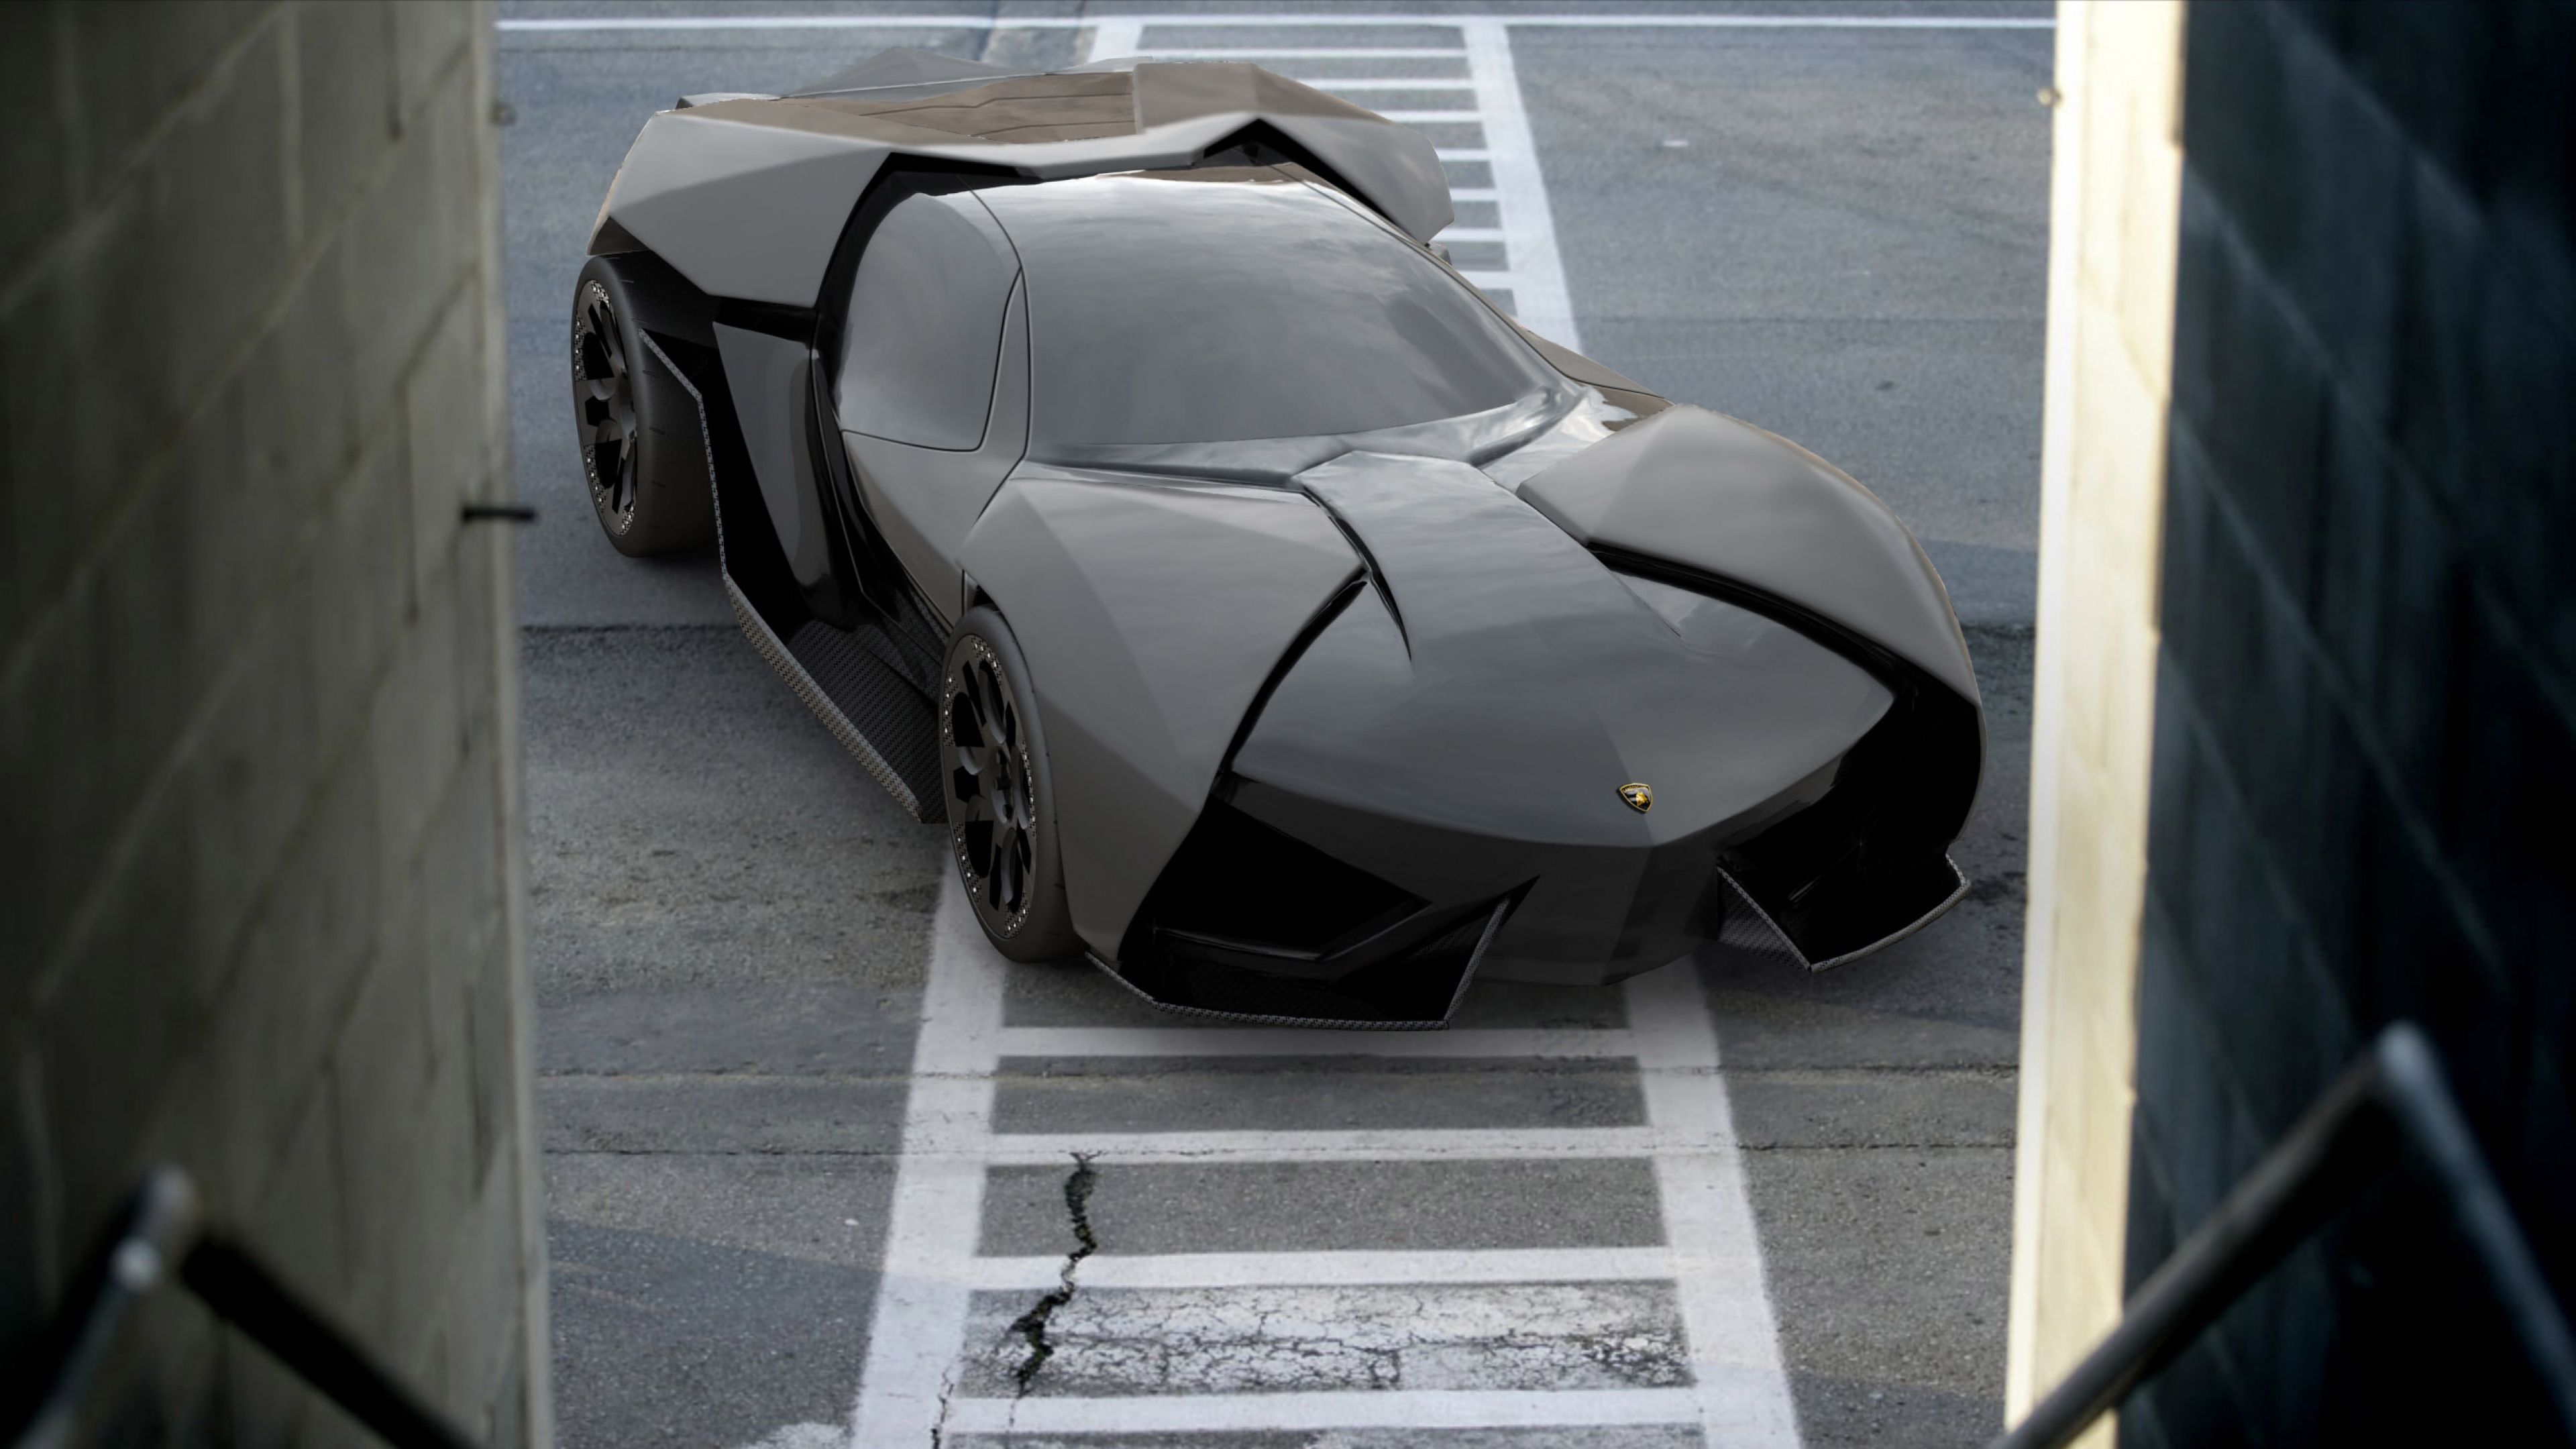 Lamborghini Ankonian Concept, HD Cars, 4k Wallpaper, Image, Background, Photo and Picture